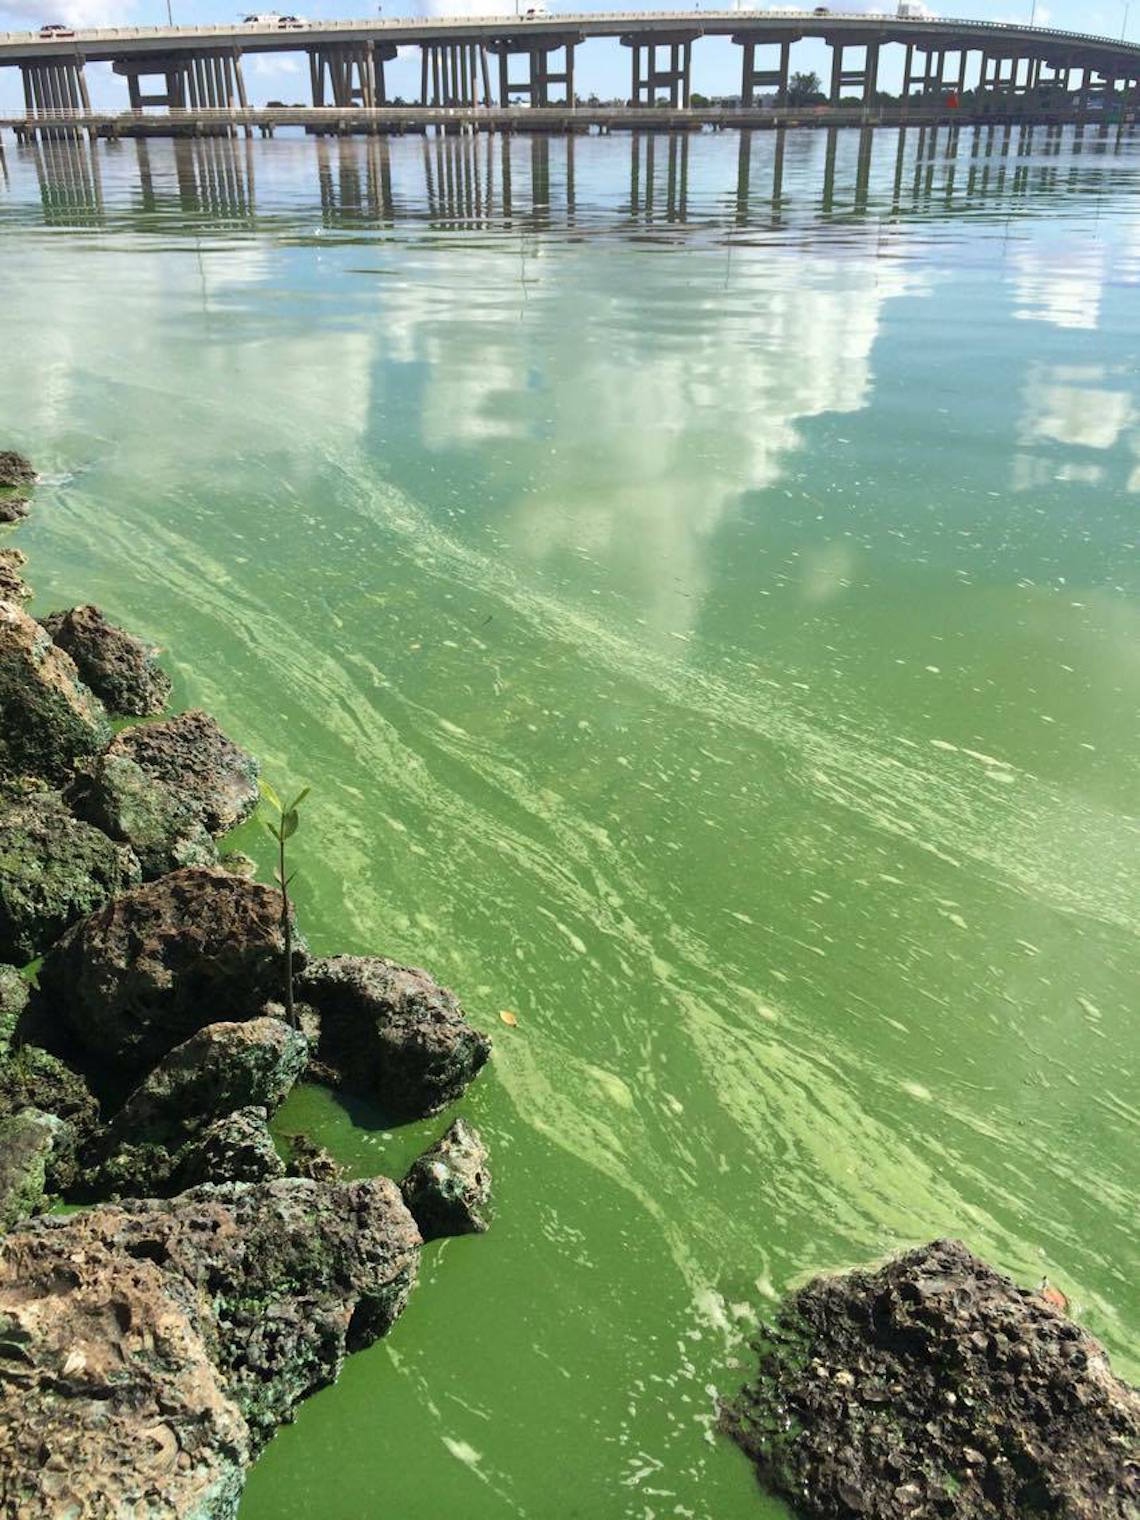 Florida, state of emergency declared as algae blooms threaten local